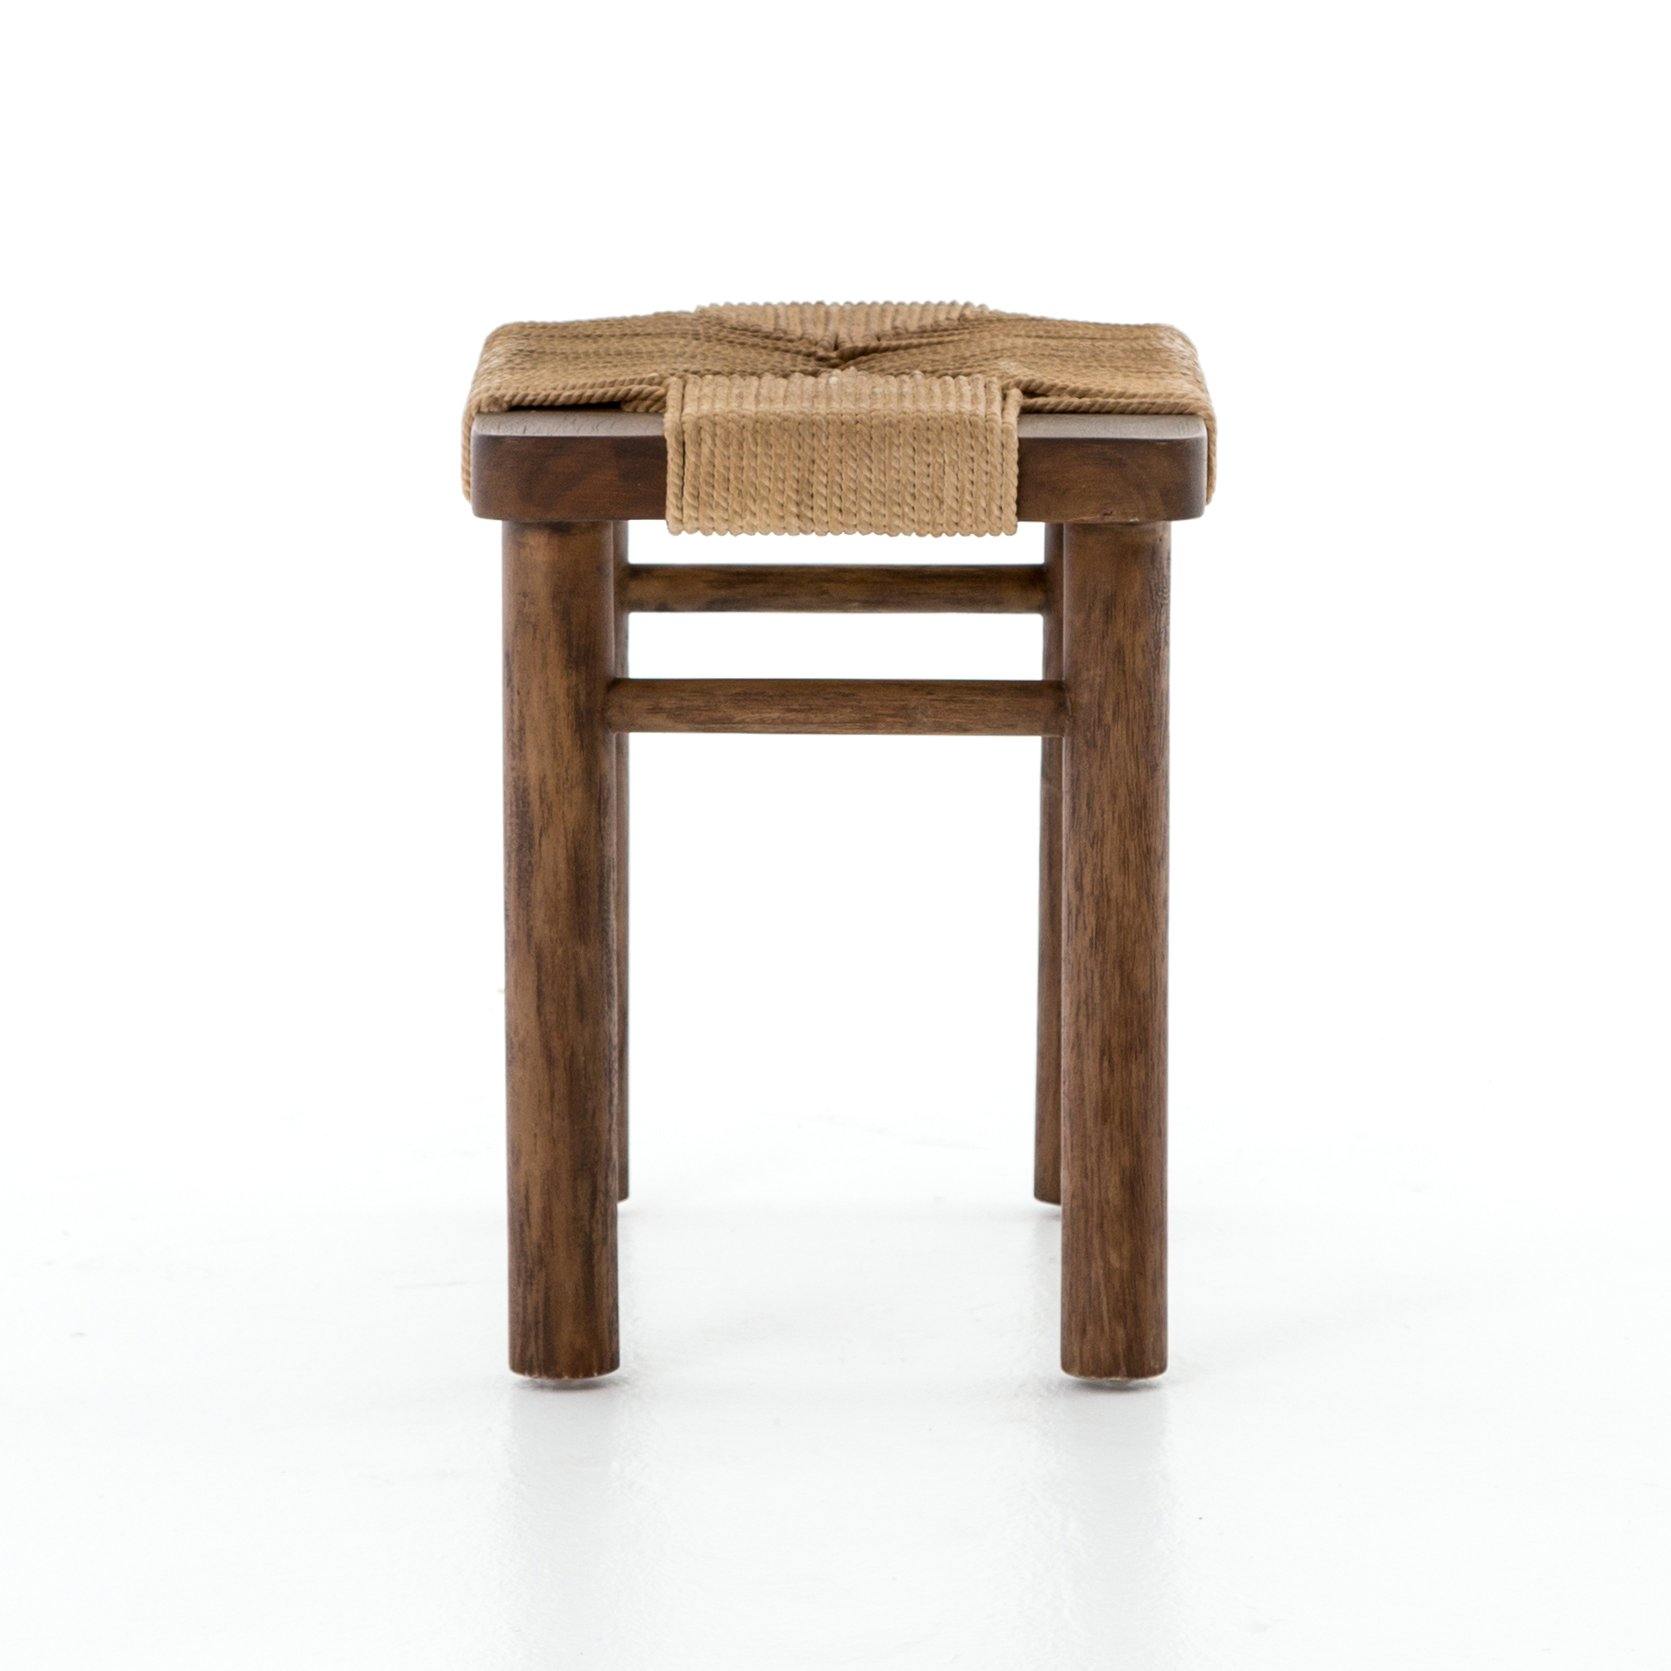 Shona Natural Stool - Reimagine Designs - bench, new, ottoman